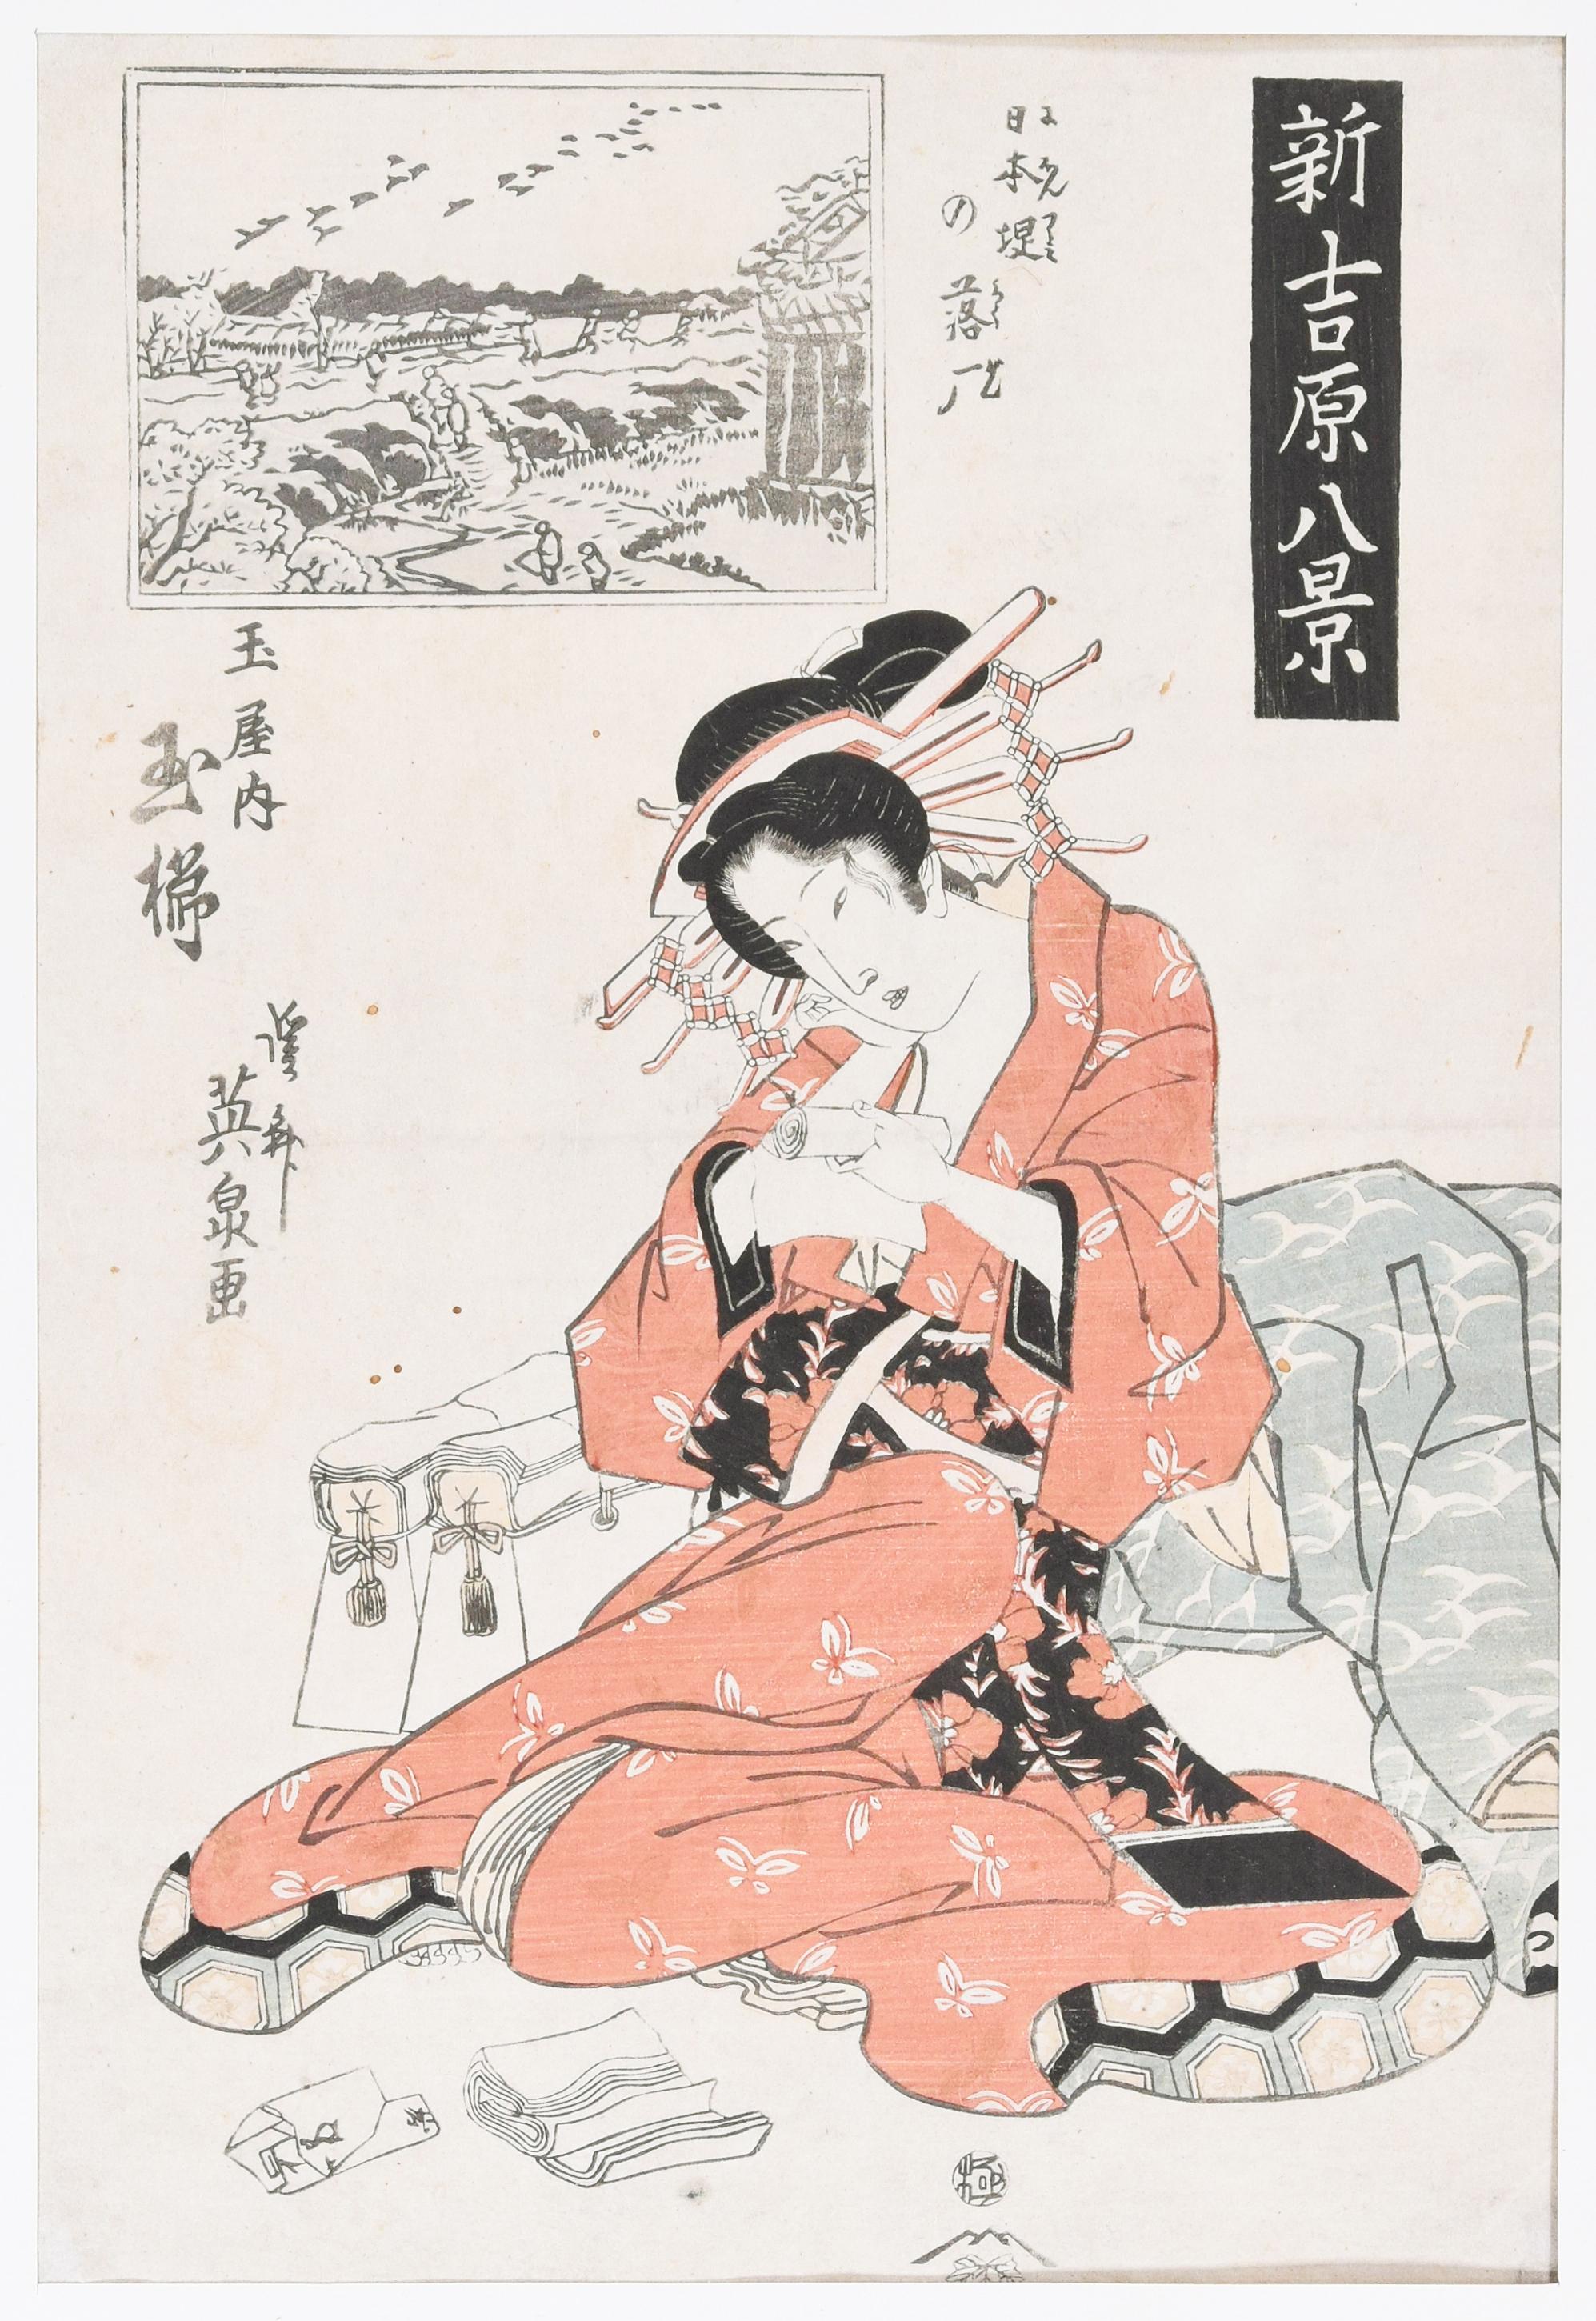 The Courtesan - Original Woodblock Print by Eisen Keisai - First Half of 1800